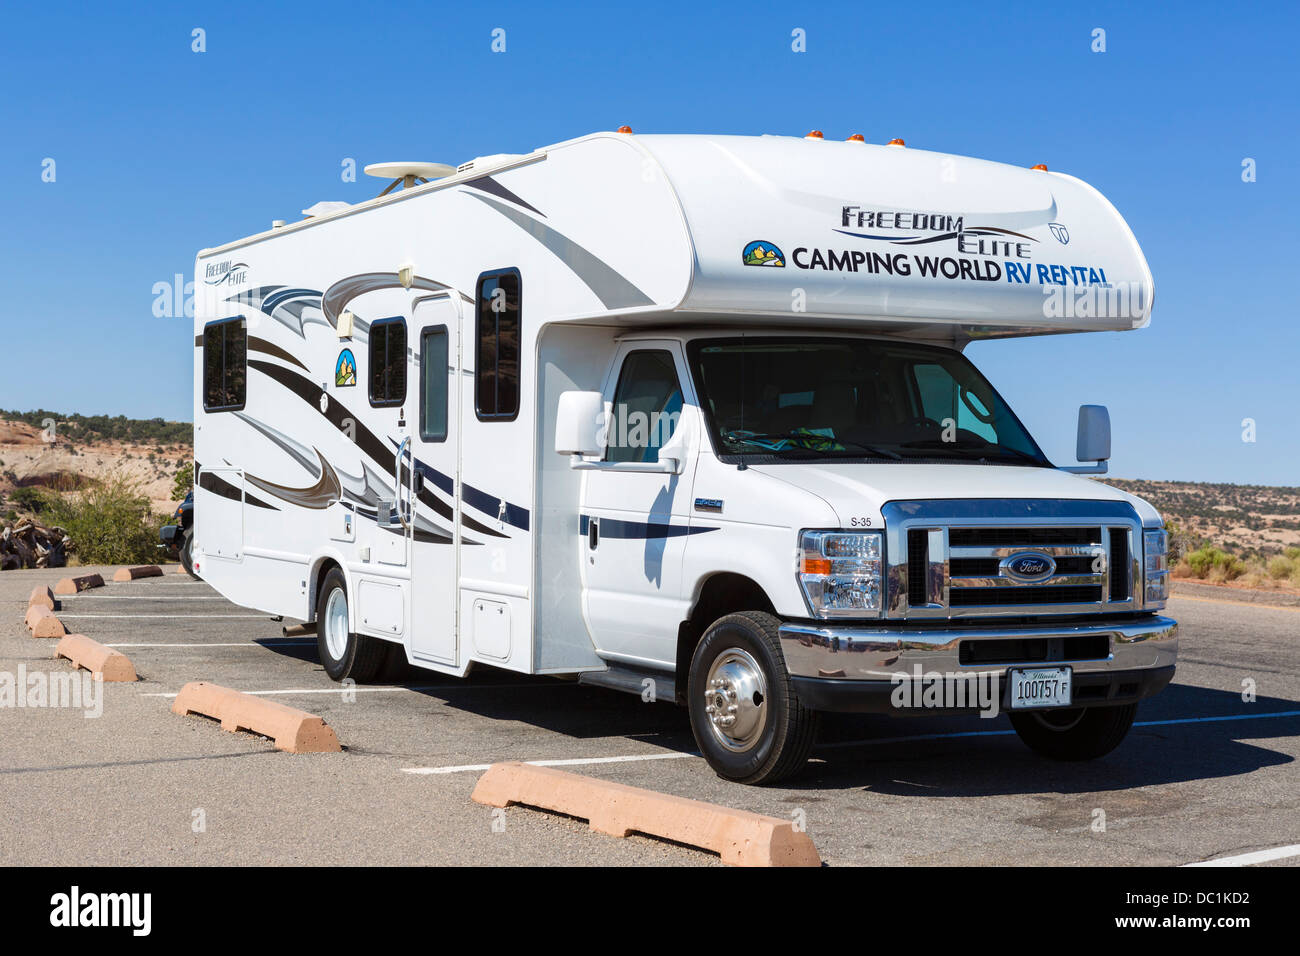 Camping World RV Rental van in Canyonlands National Park, Utah, USA Stockfoto